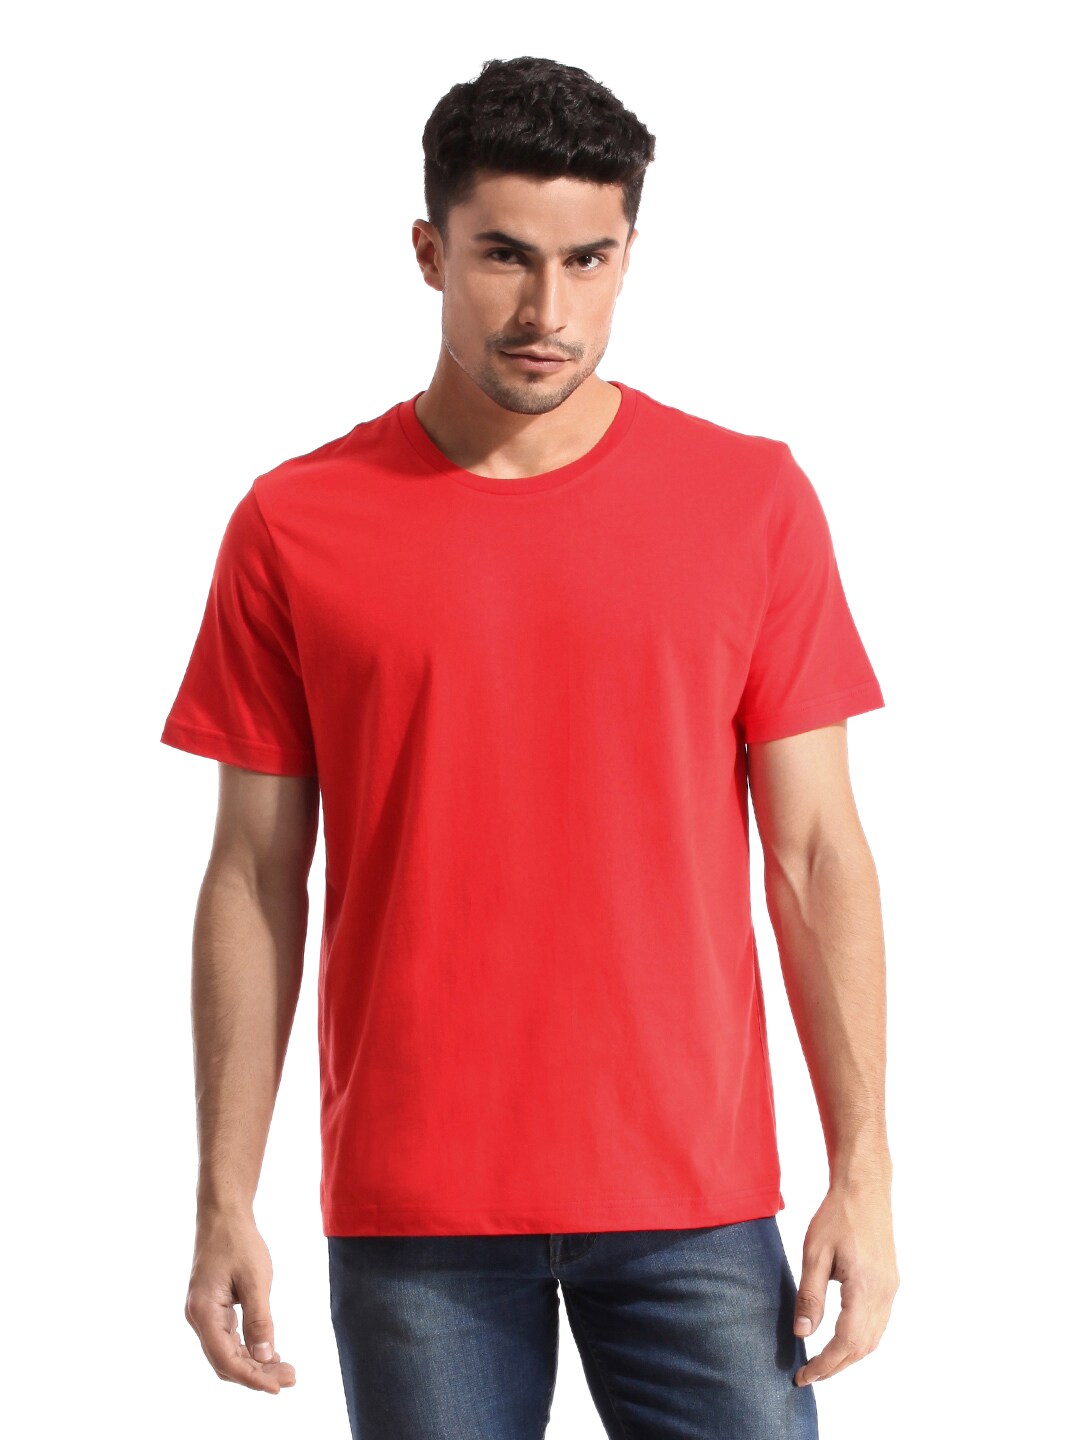 Puma Men Blank Red T-shirt